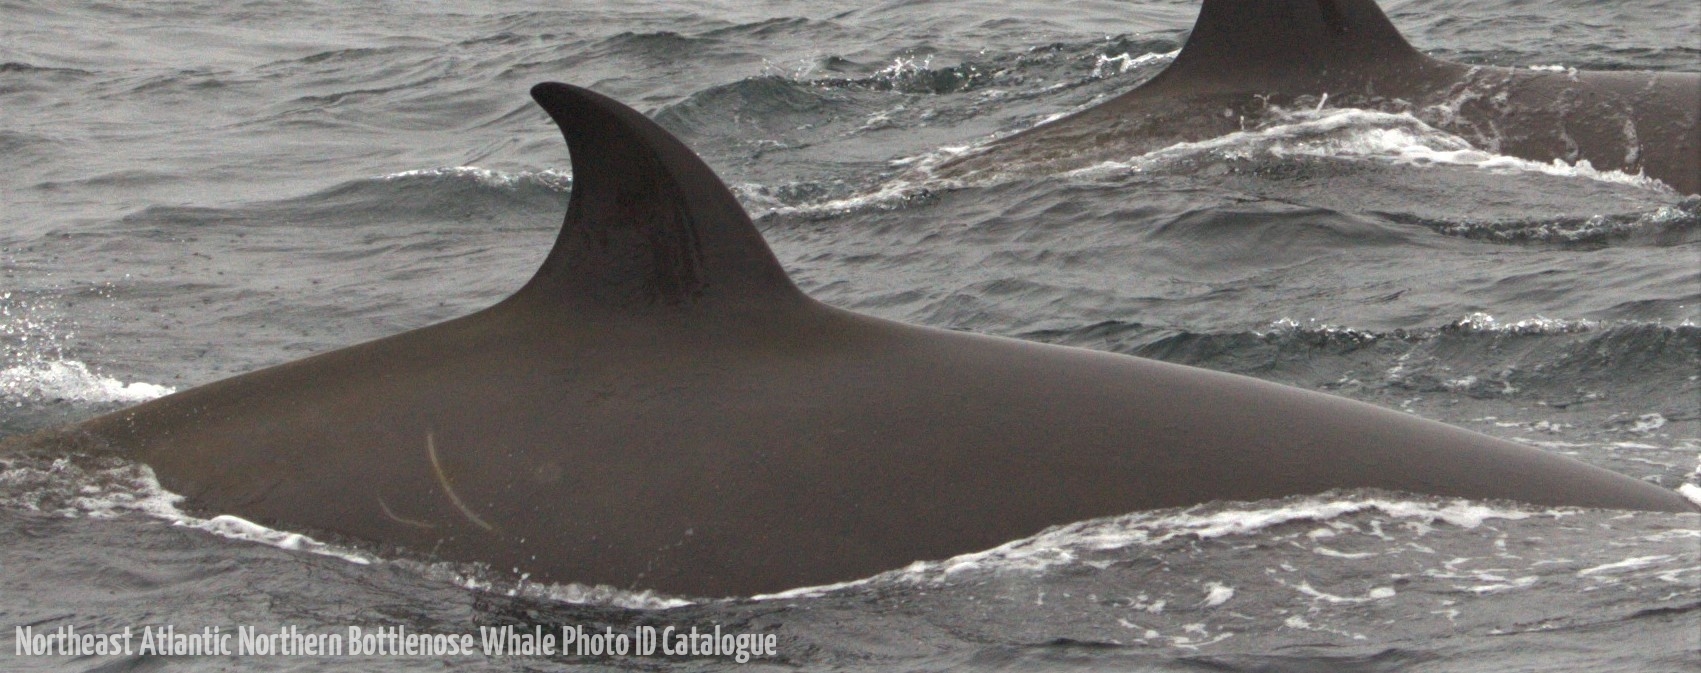 Whale ID: 0324,  Date taken: 20-06-2015,  Photographer: Joanna L. Kershaw